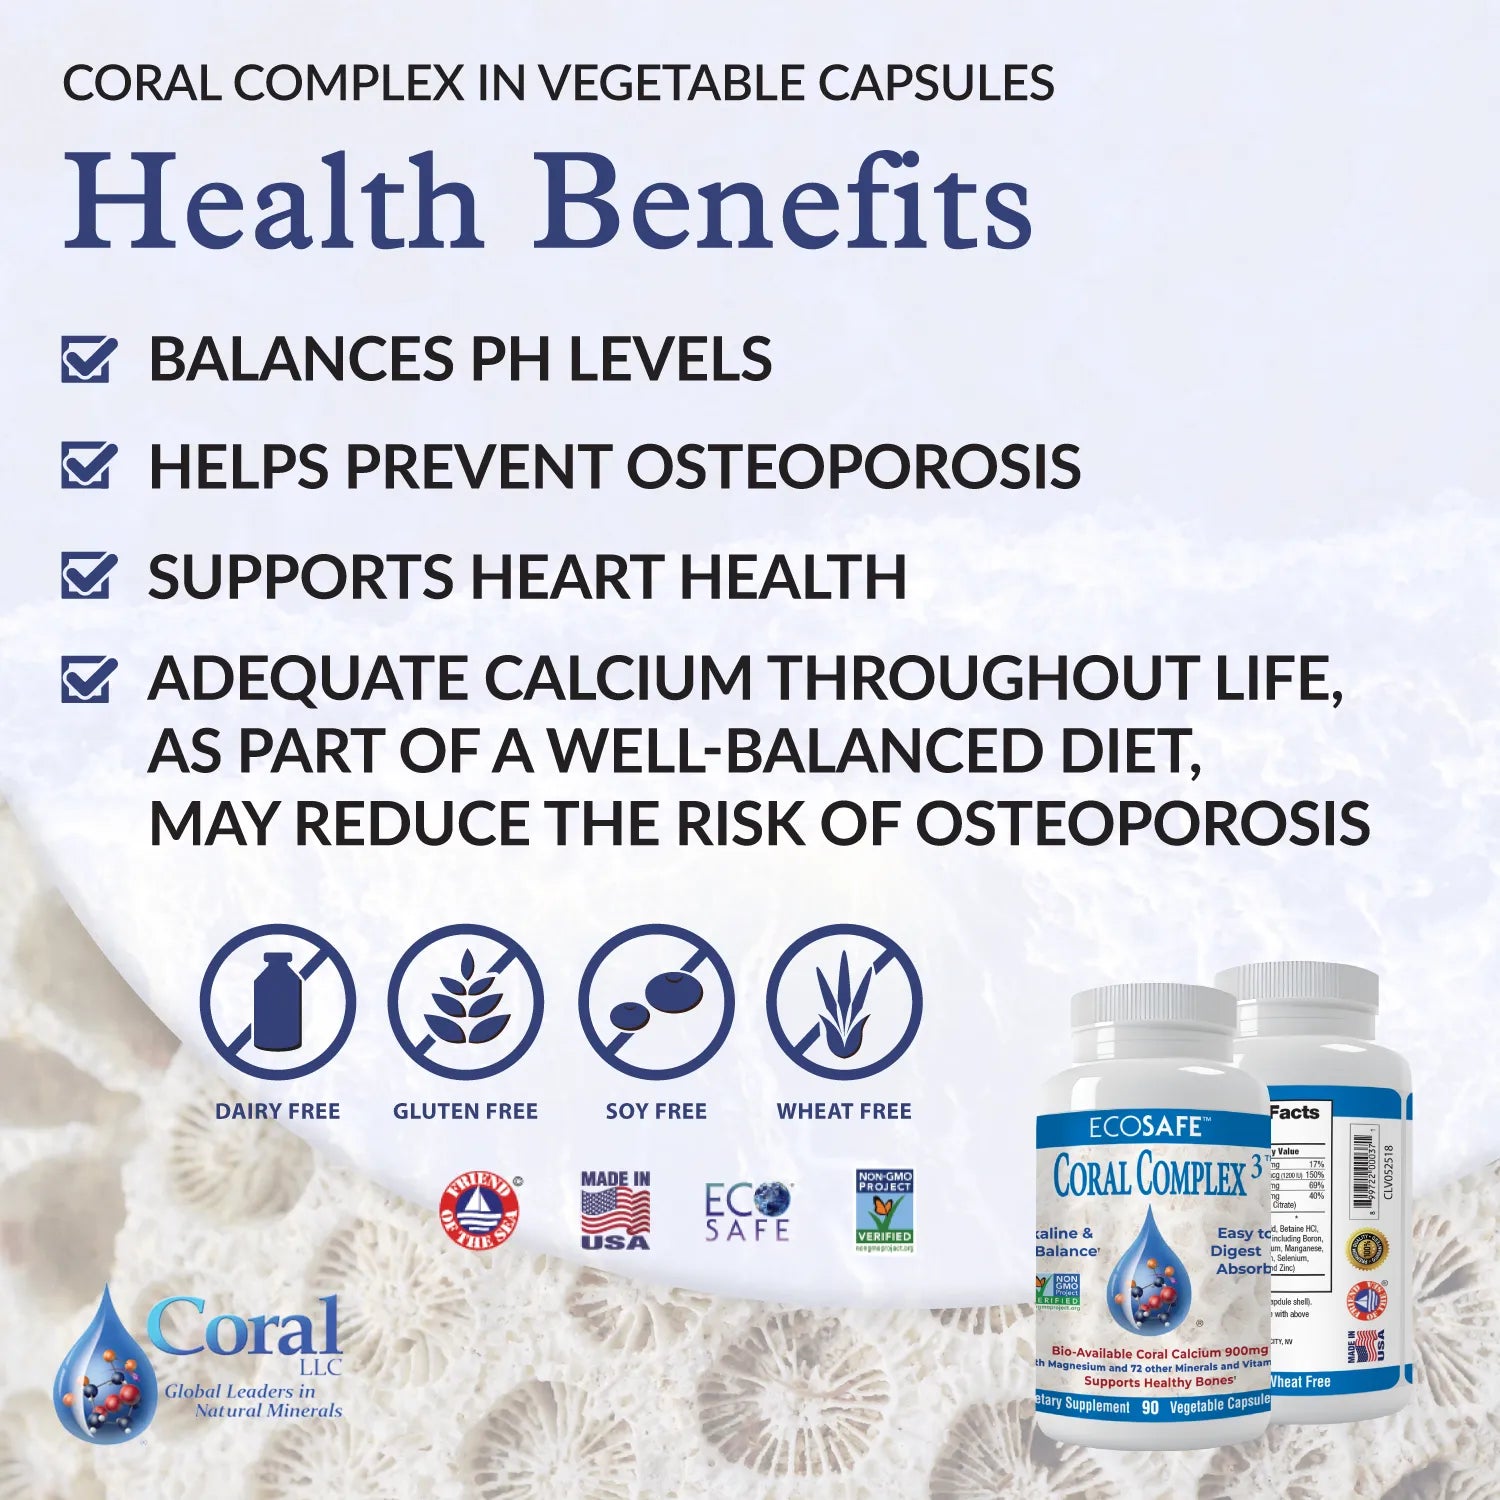 Coral Complex 3 Health Benefits